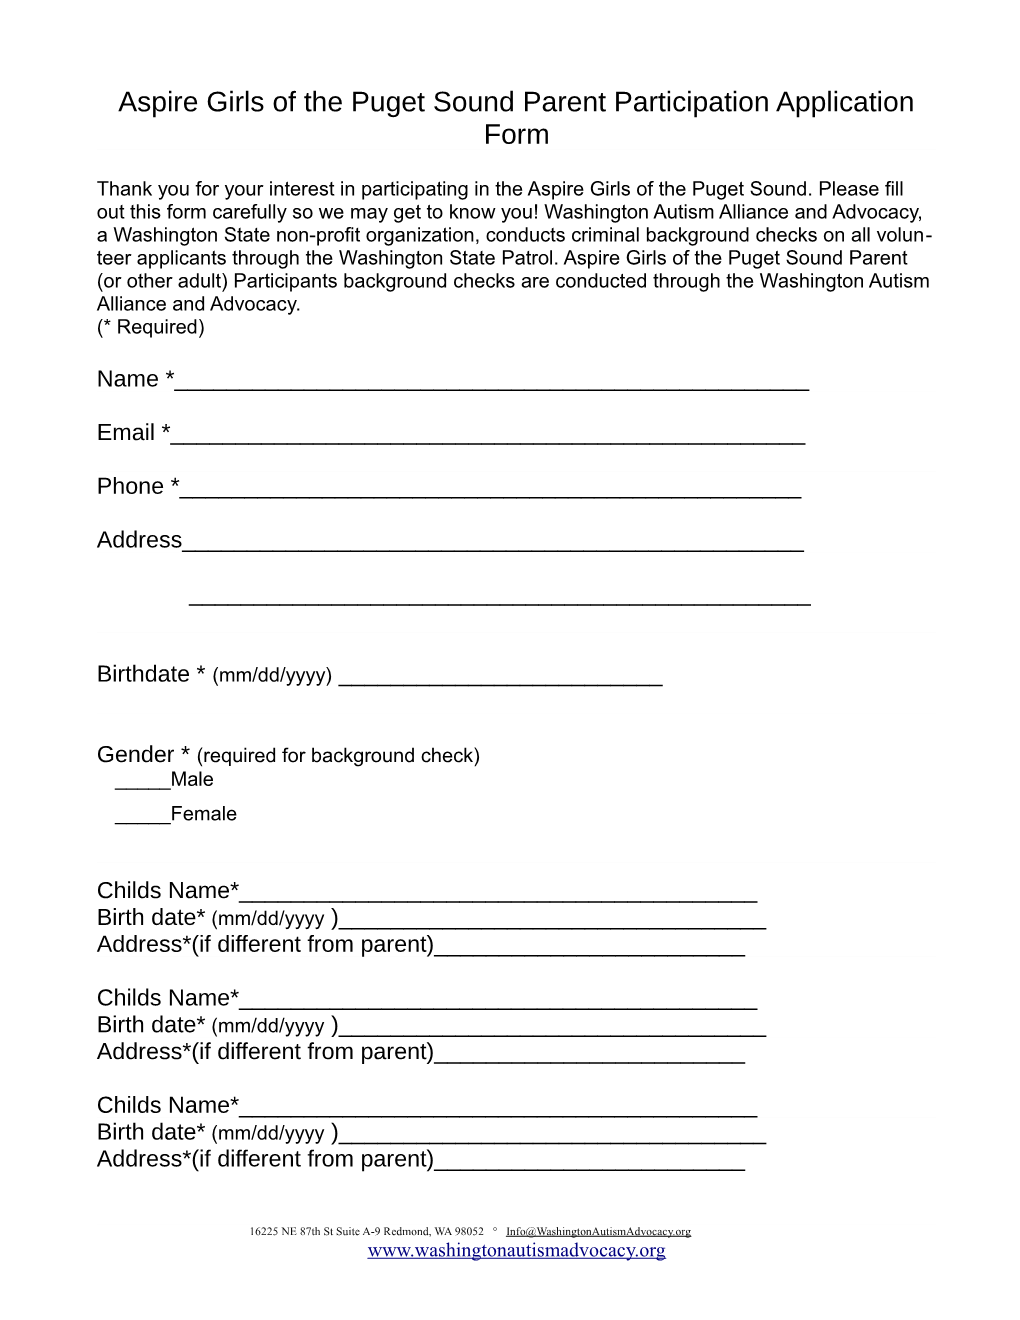 Aspire Girls of the Puget Sound Parent Participation Application Form